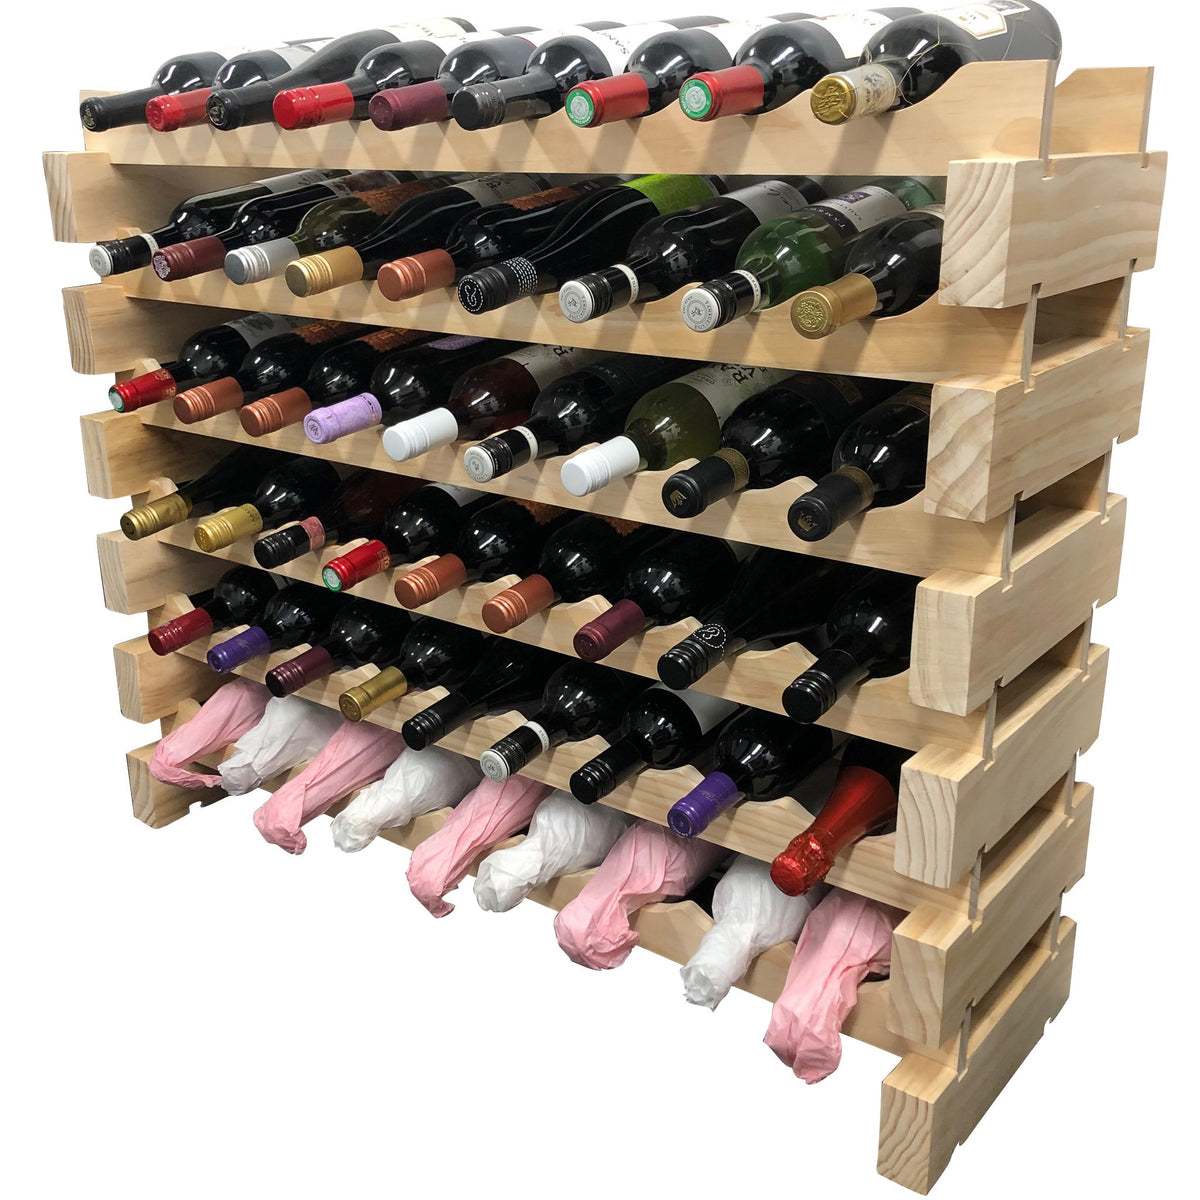 4 Bottle Modular Wine Rack Kit - New Zealand Pine - With Bottles of Wine